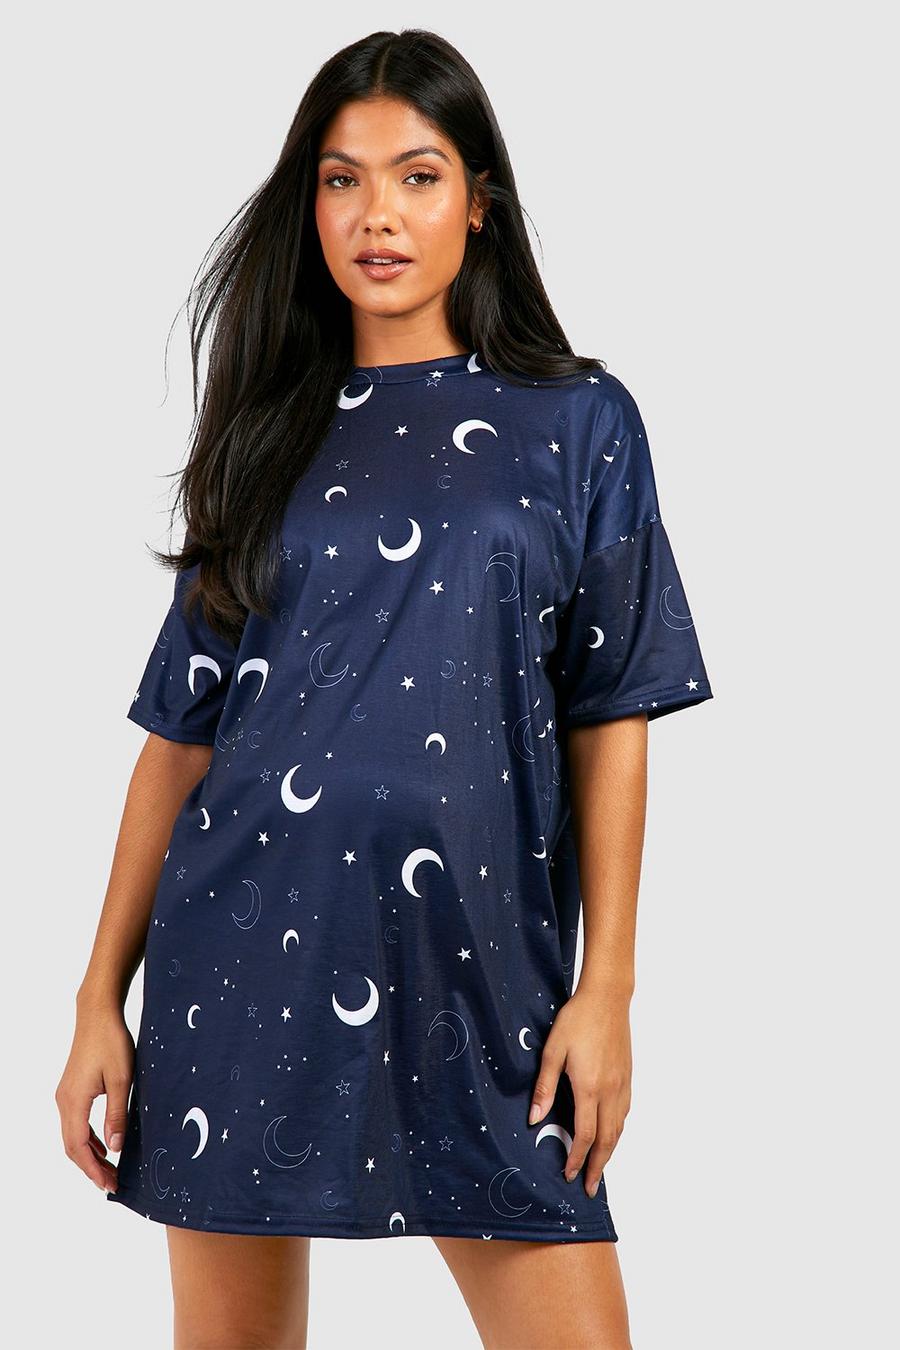 Navy blu oltremare Maternity Celestial Star Print Nightie